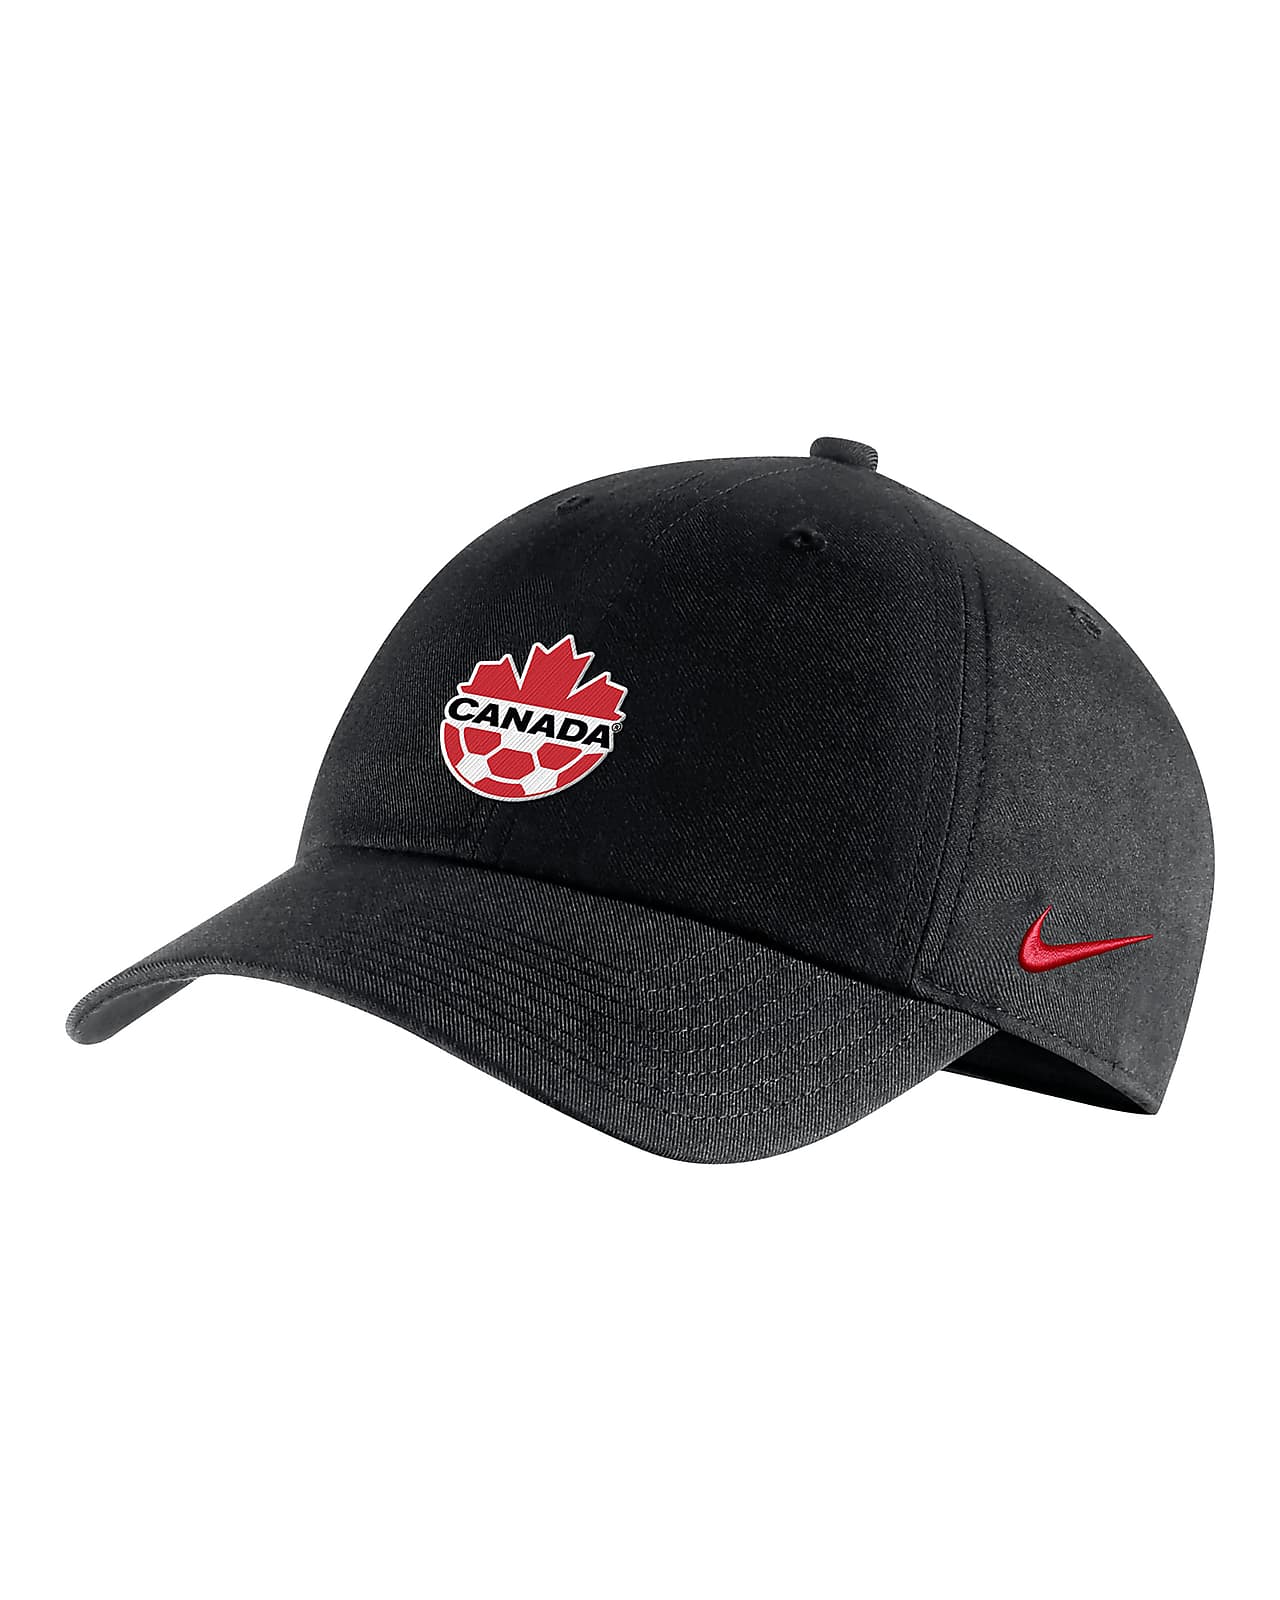 Canada Heritage86 Men's Adjustable Hat